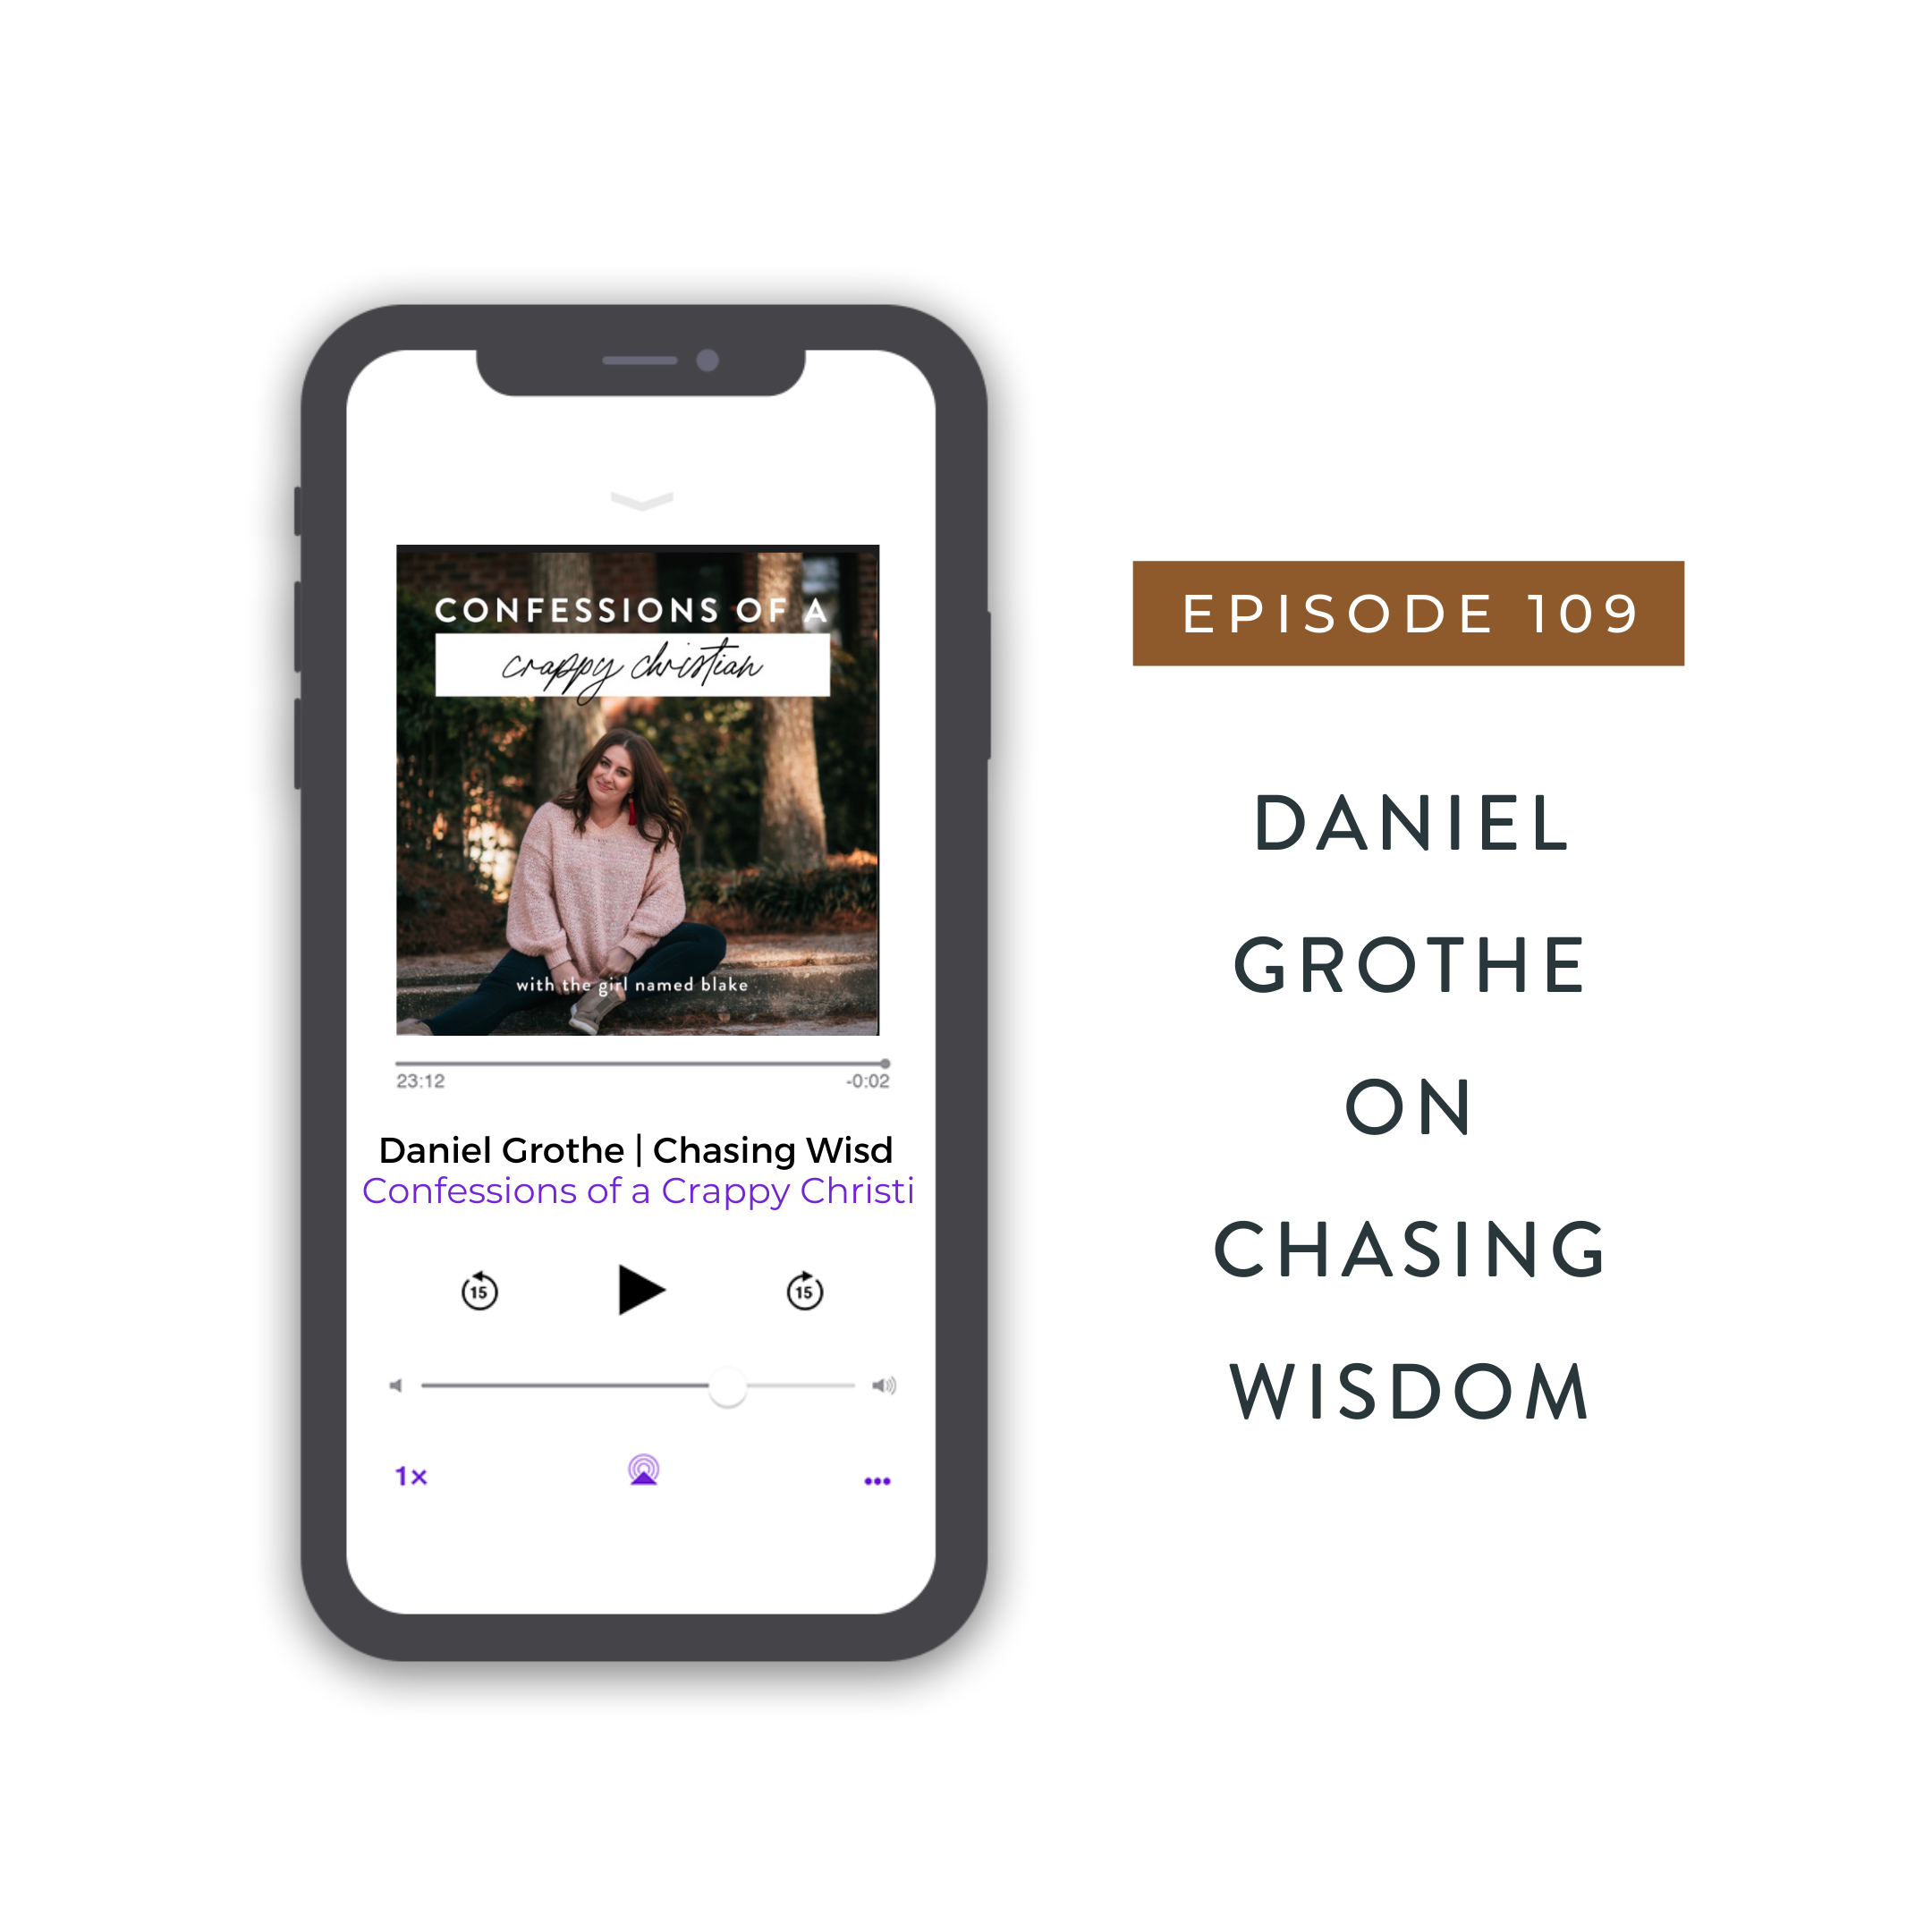 Daniel Grothe | Chasing Wisdom